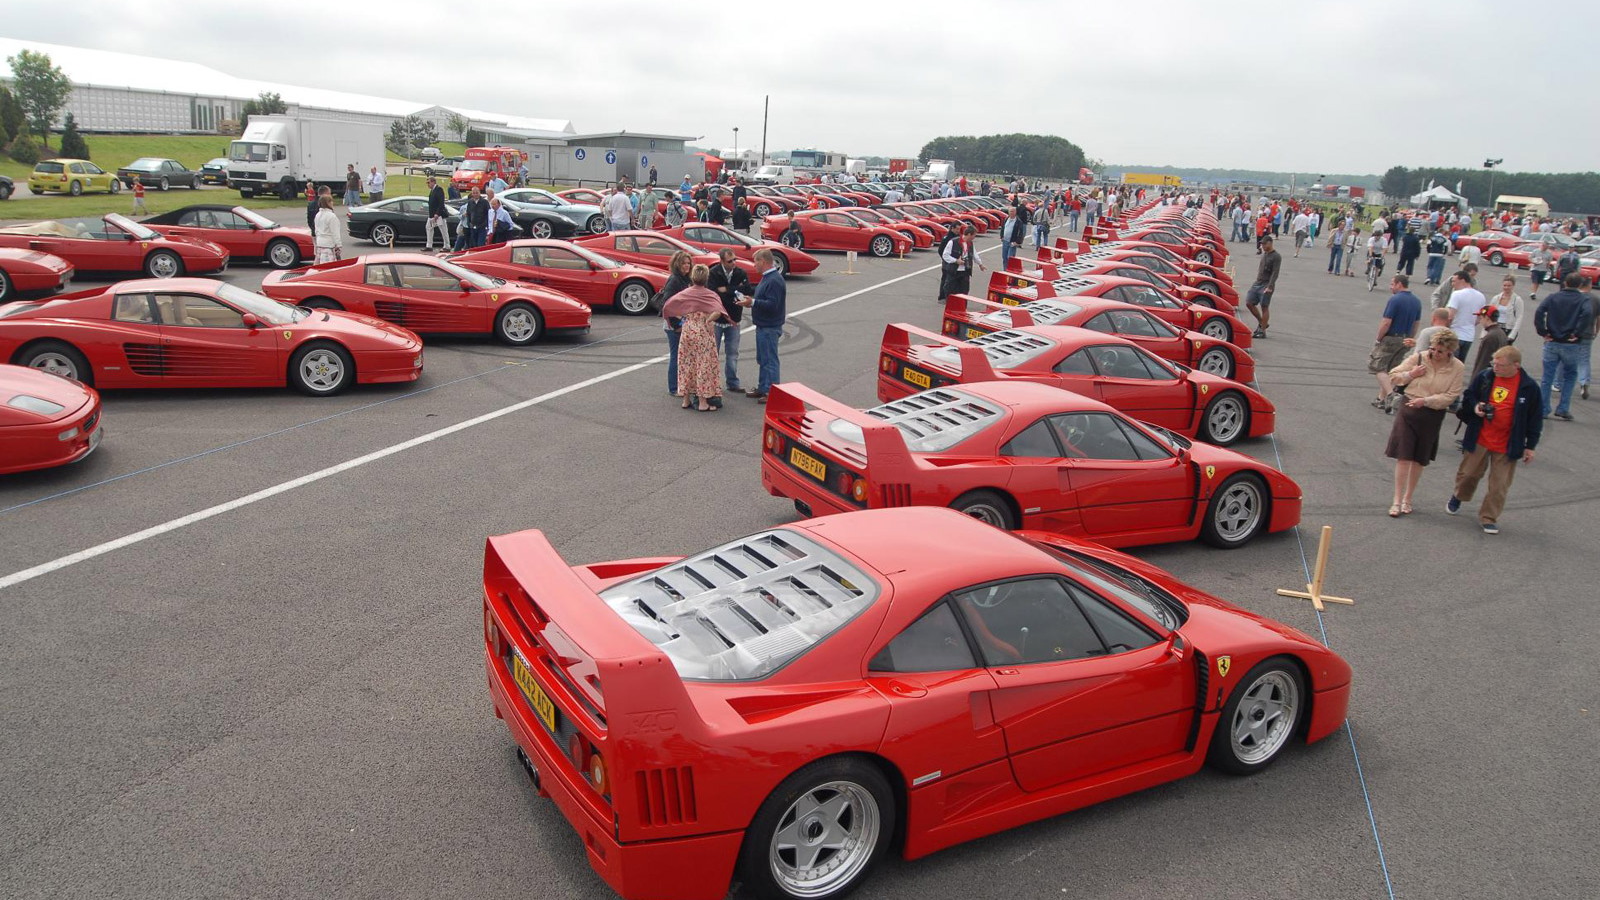 40 Ferrari F40s celebrate the car’s 20th birthday in 2007